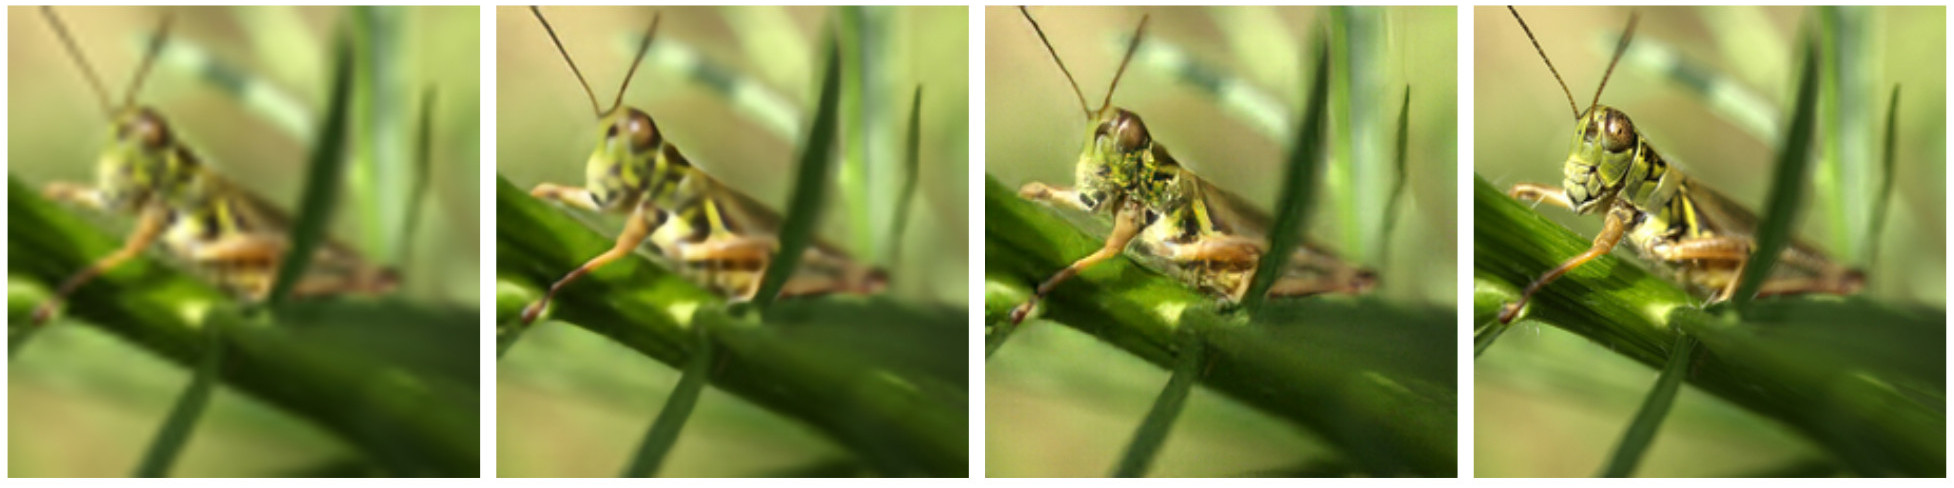 Enhancenet comparison grasshopper